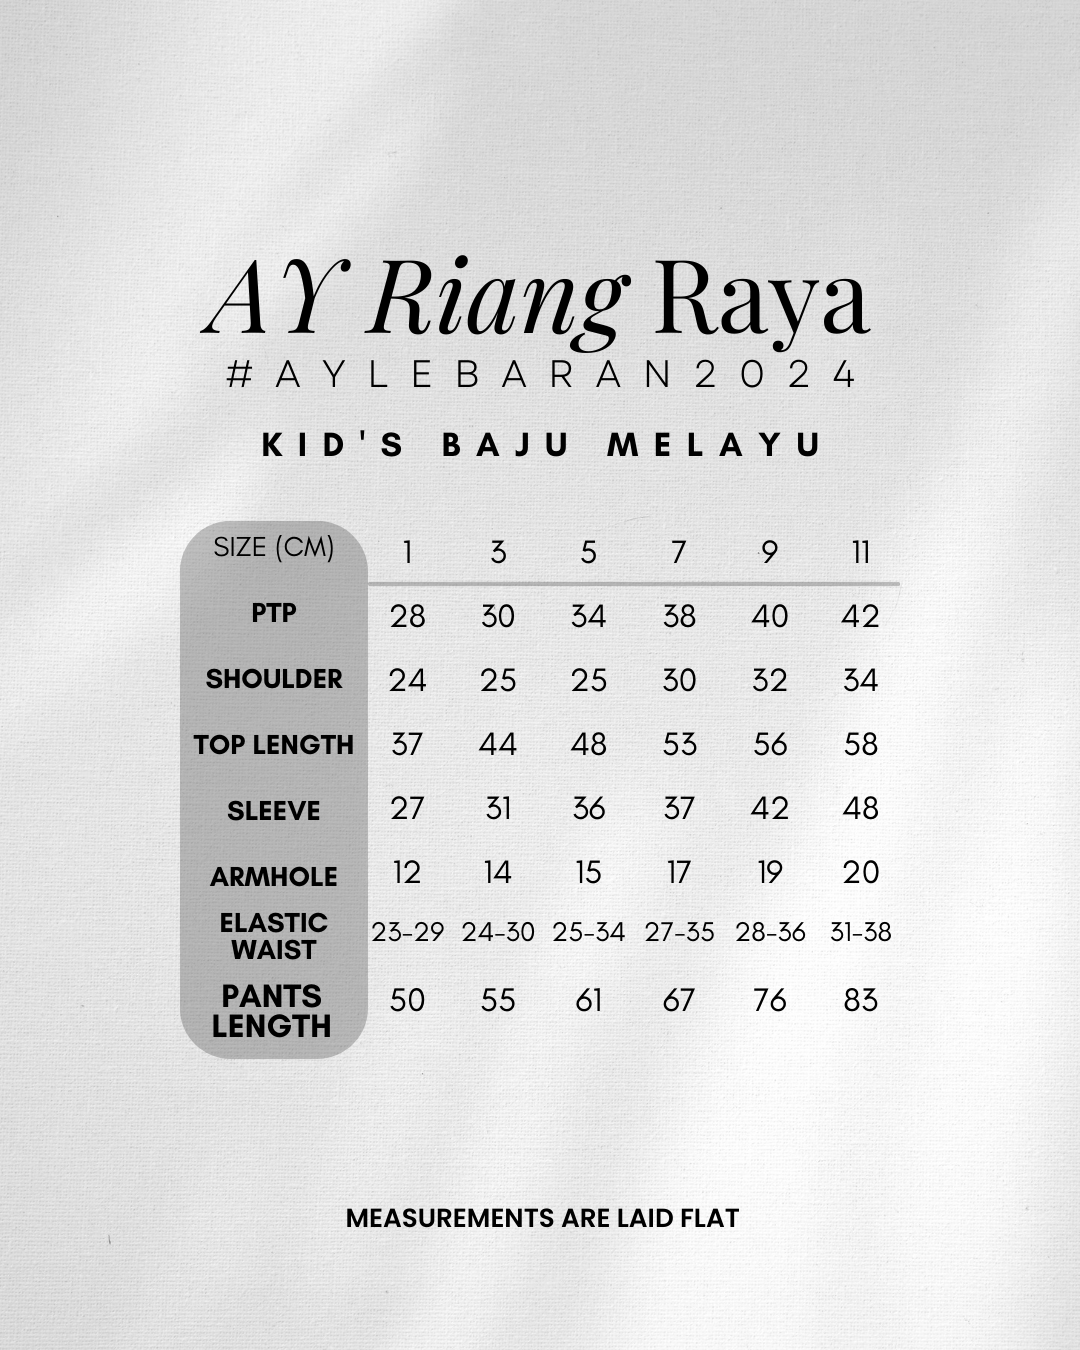 AYLEBARAN 2024 Syahdu Kid's Baju Melayu